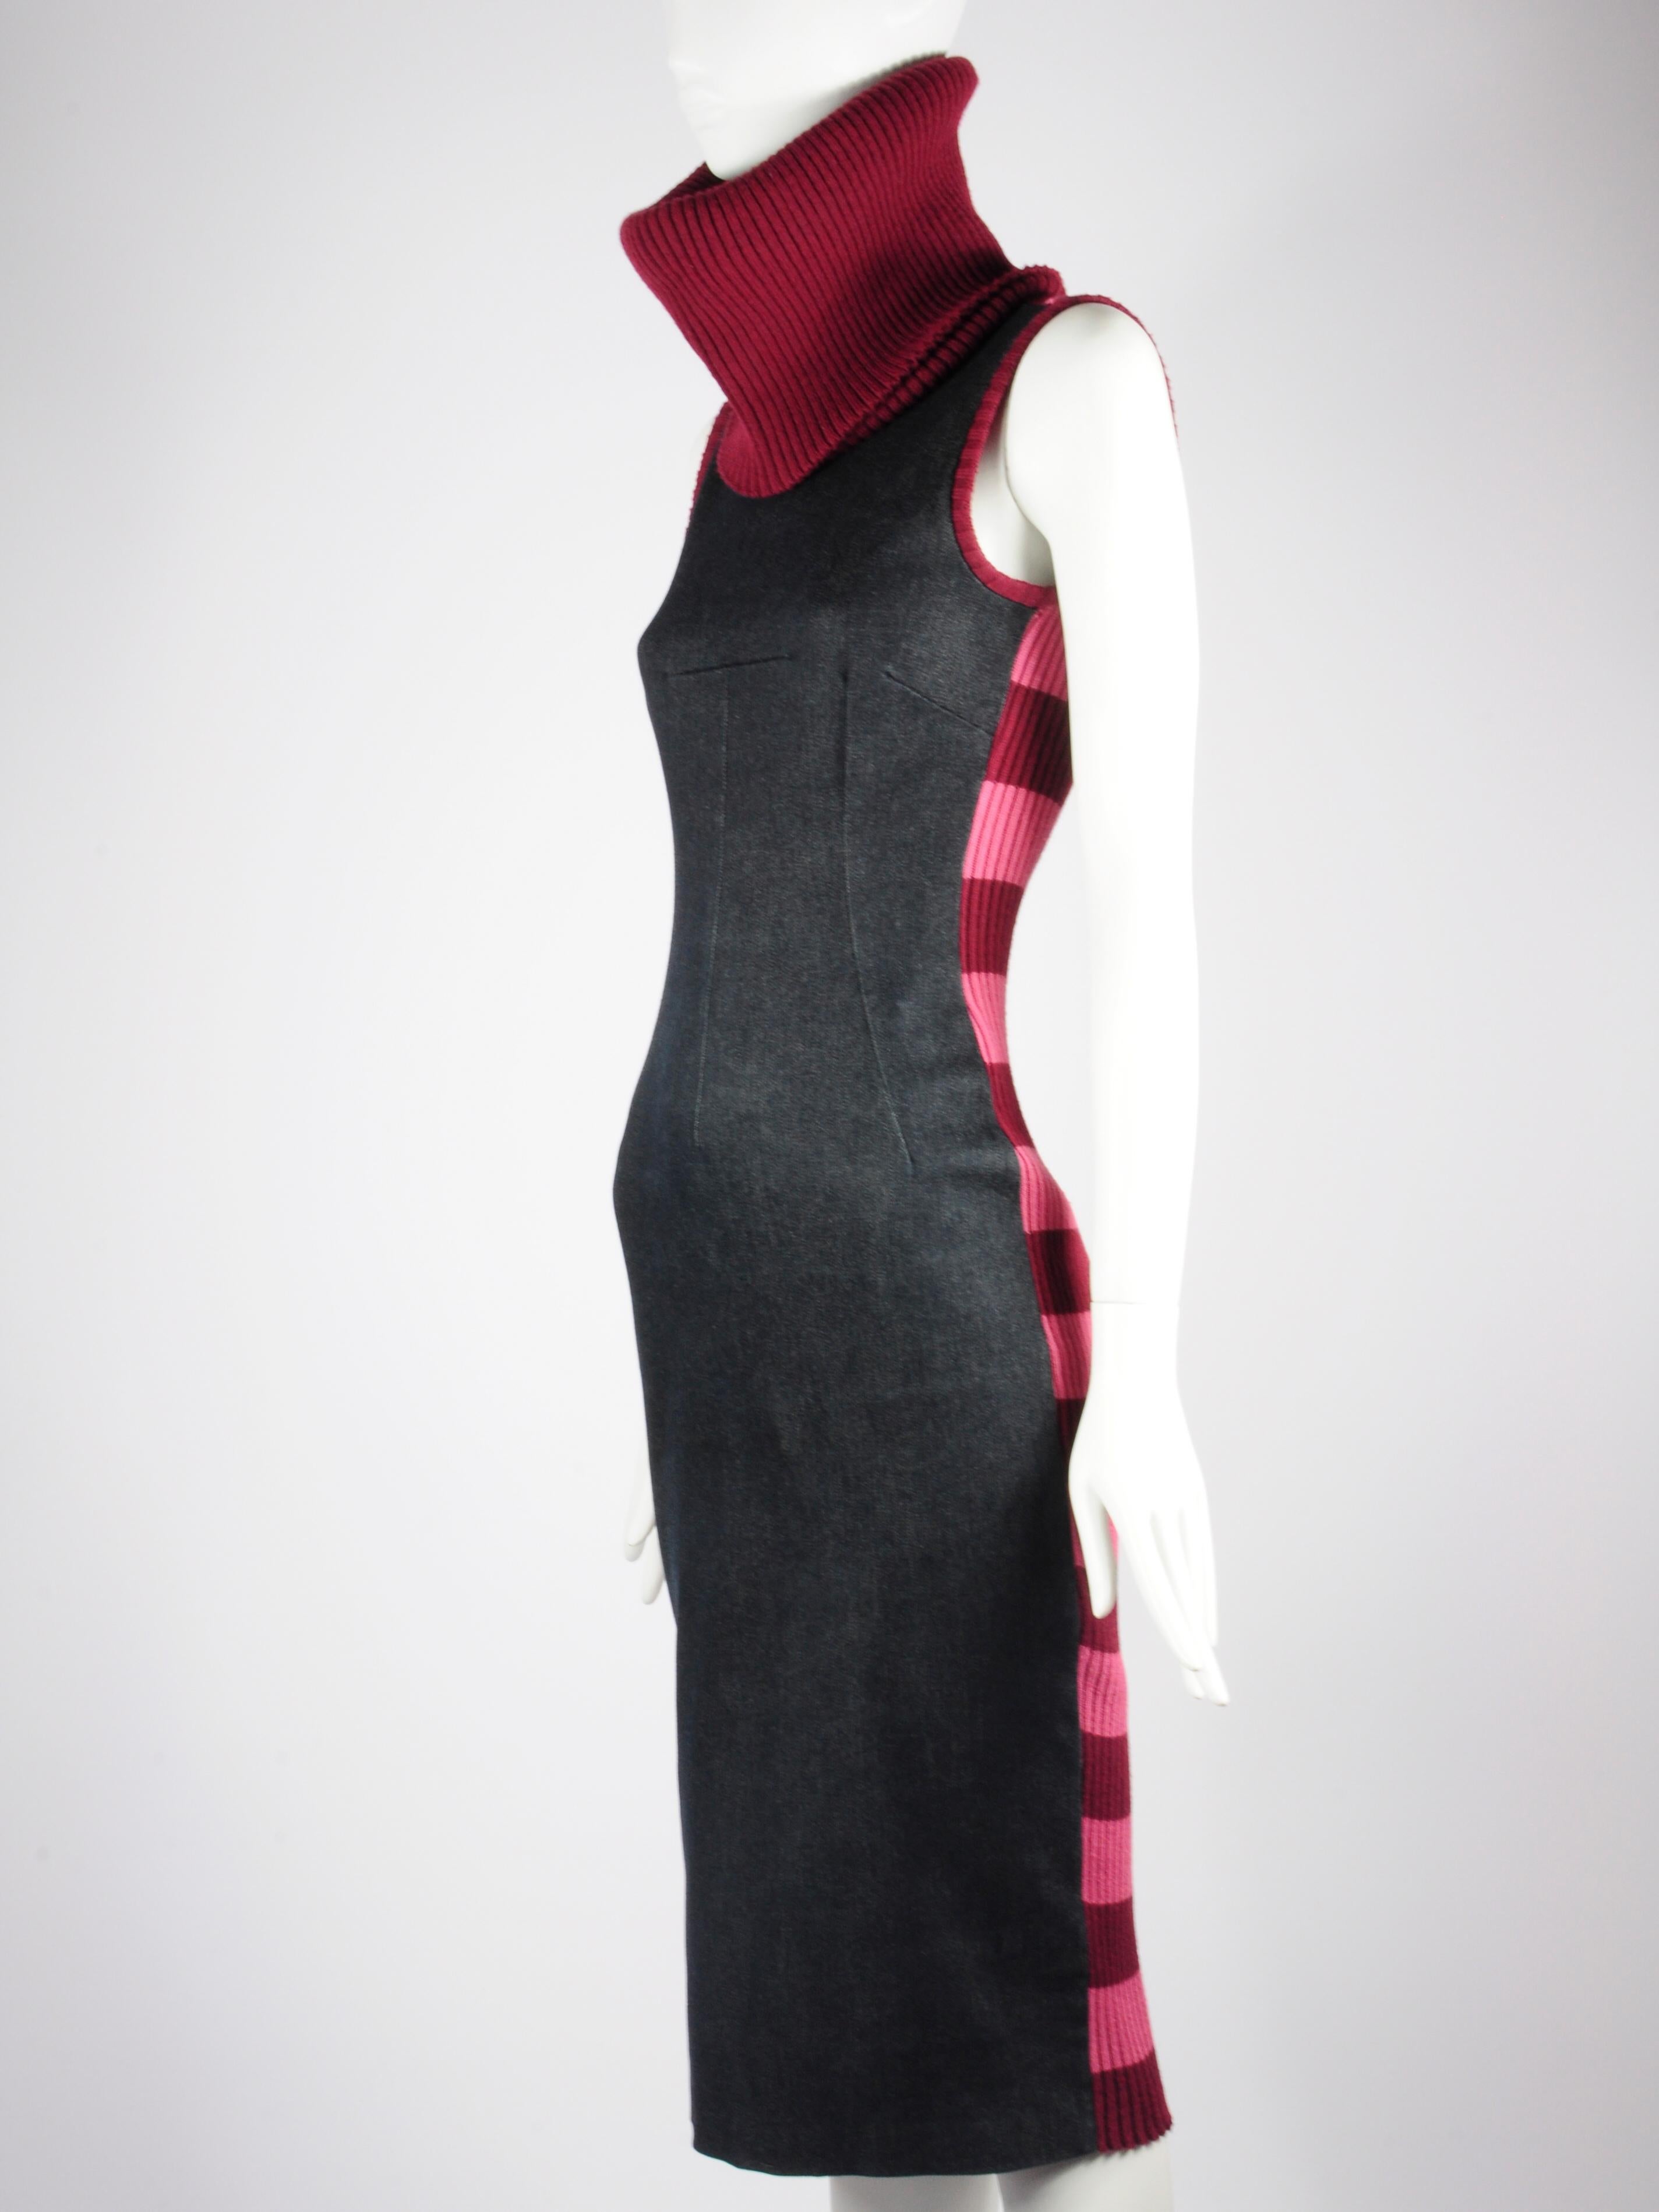 D&G Dolce & Gabbana Denim and Knitwear Dress Striped Turtleneck Sleeveless 1990s For Sale 6